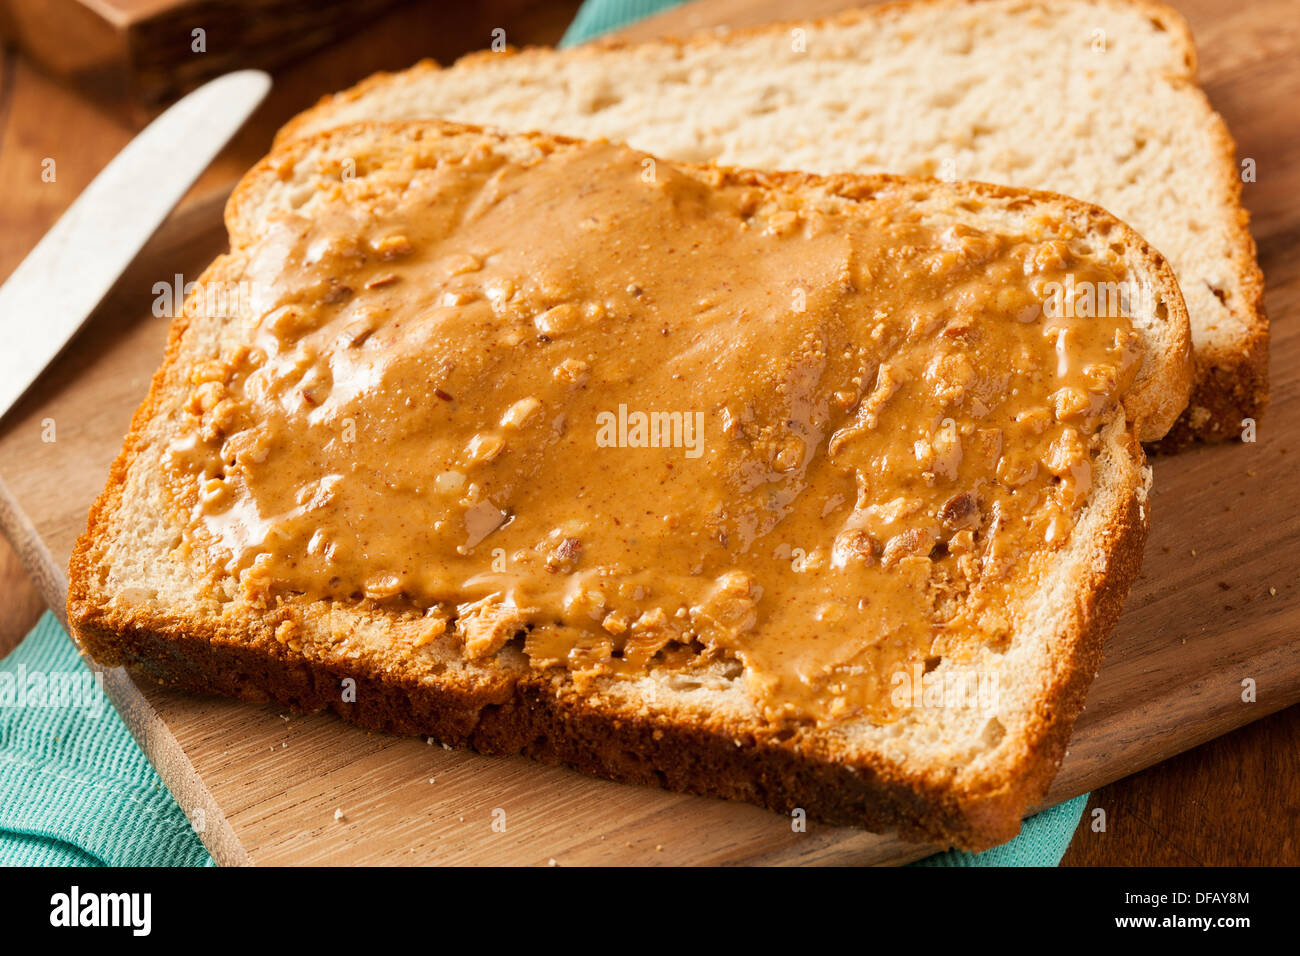 Homemade Chunky Peanut Butter Sandwich On Whole Wheat Bread Stock Photo Alamy